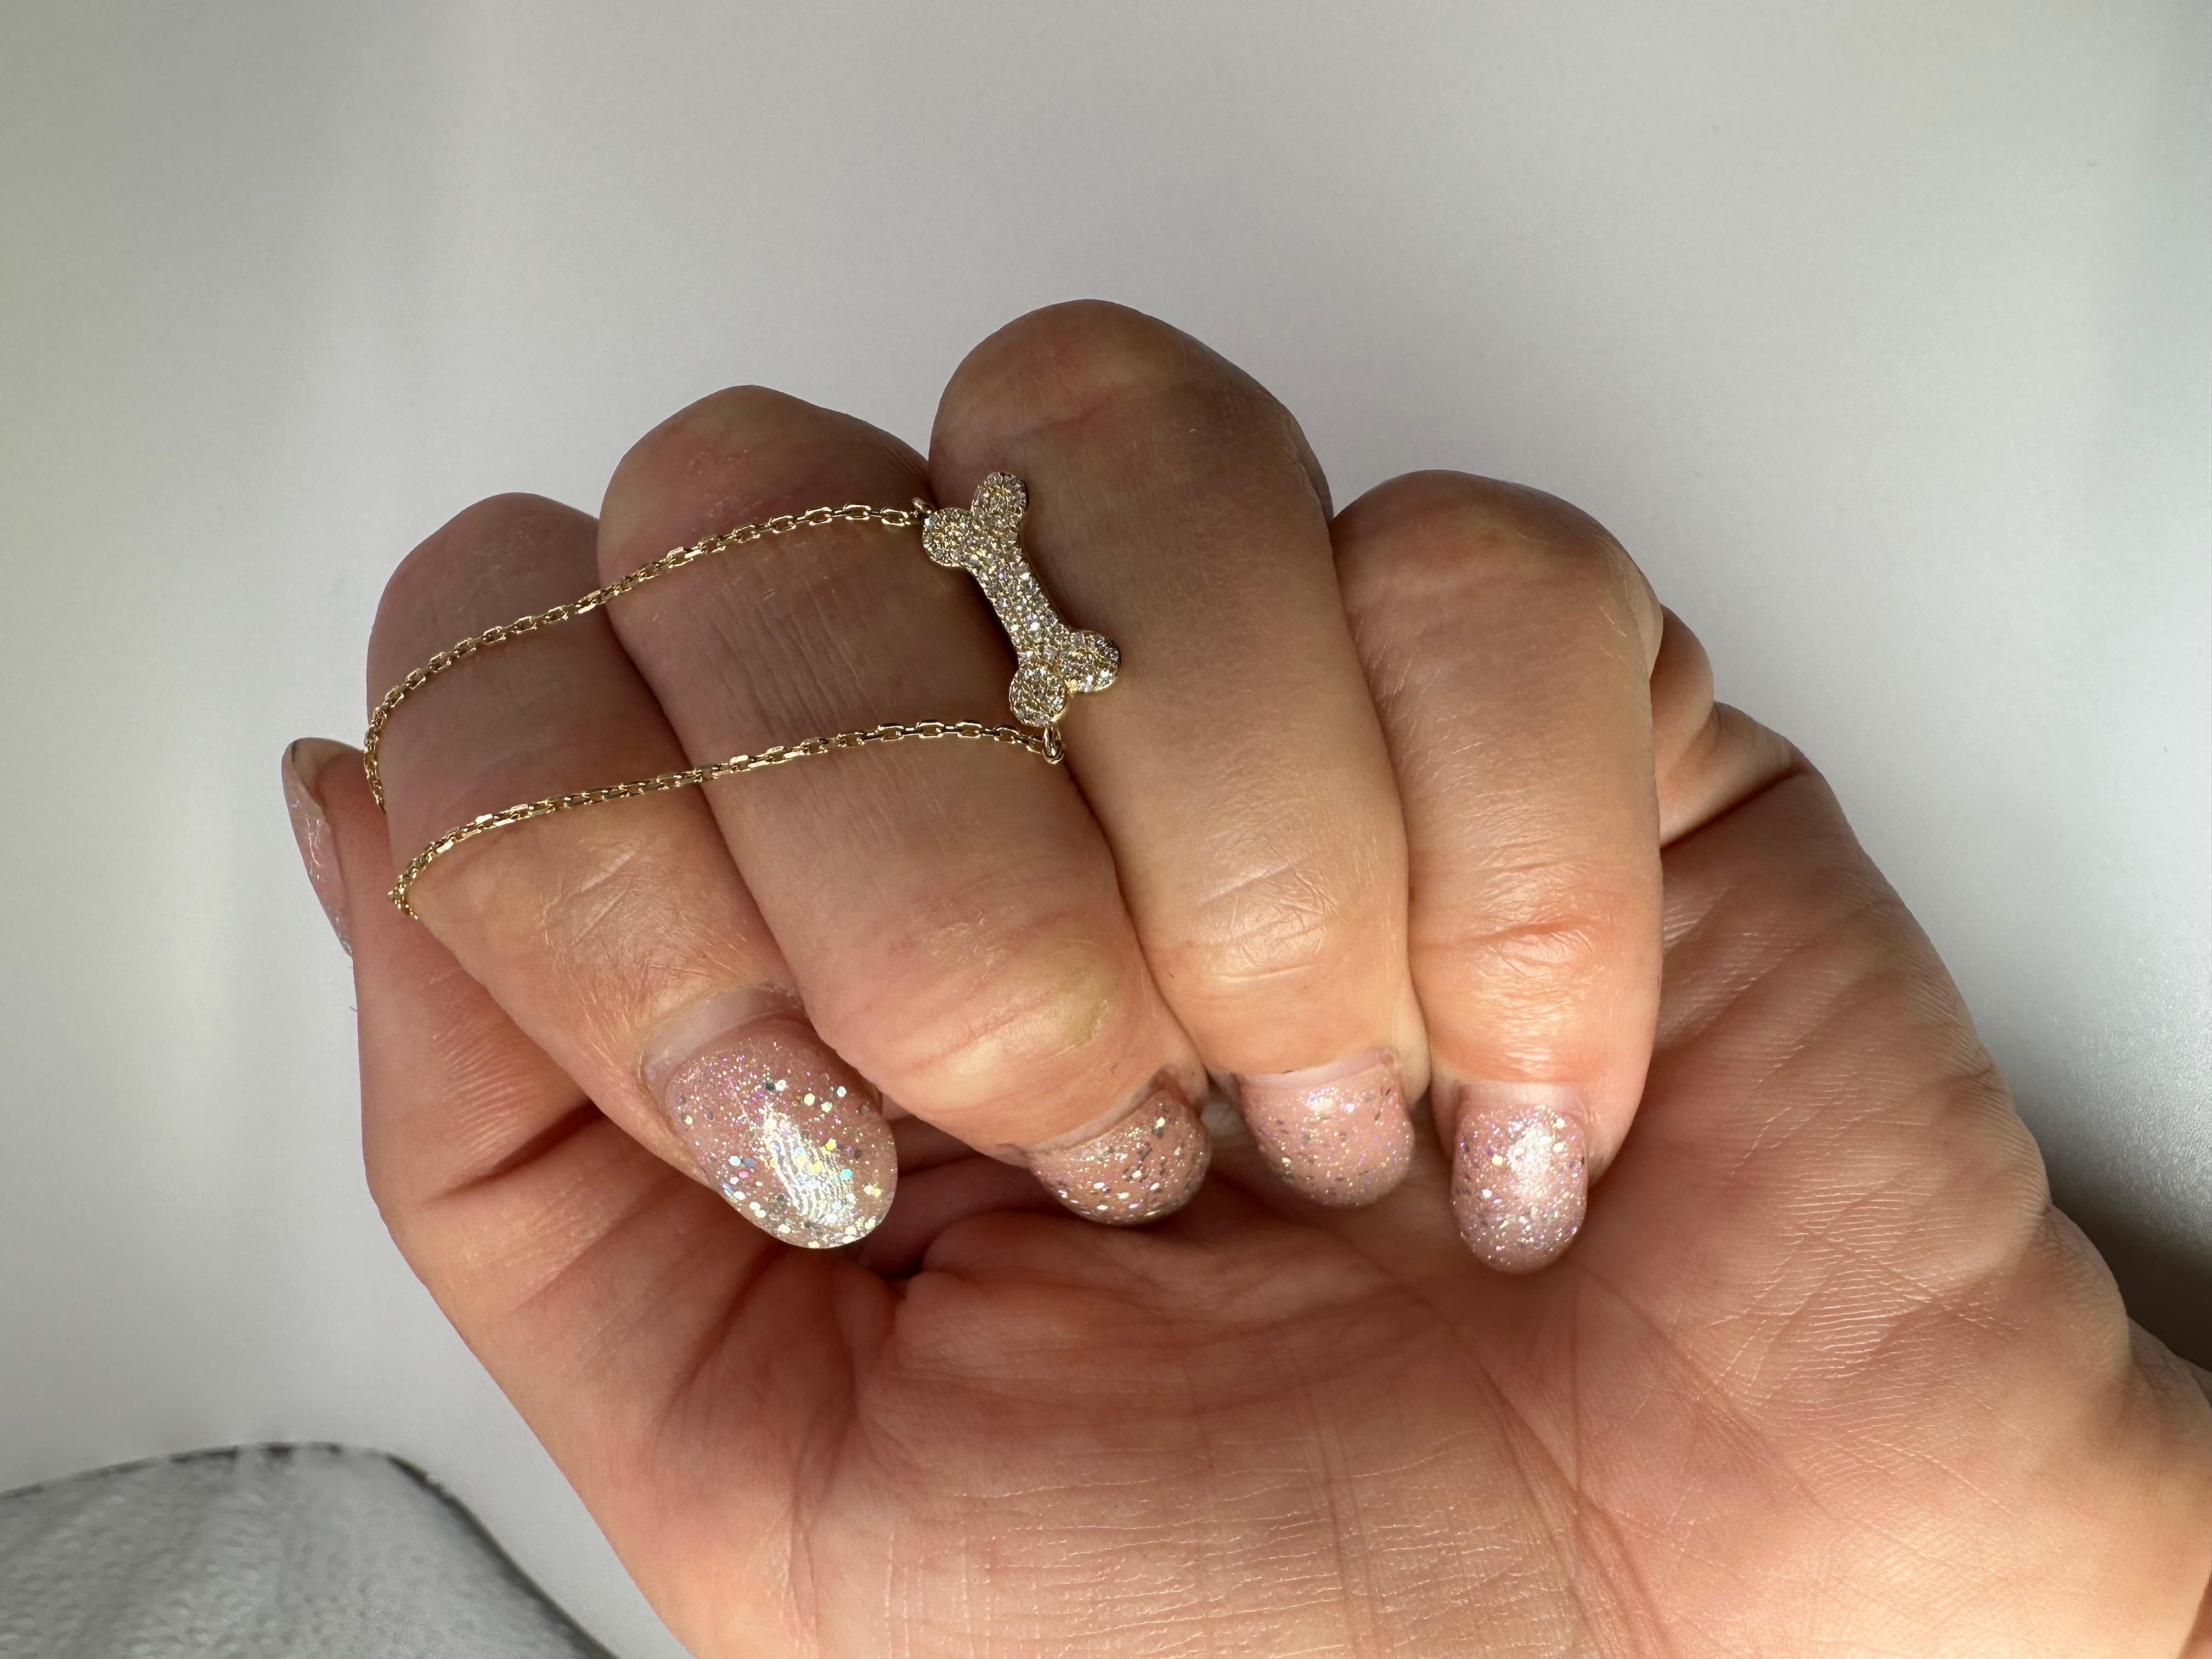 Dog Bone Pendant Necklace 14 Karat Diamond Pendant Necklace In New Condition For Sale In Jupiter, FL